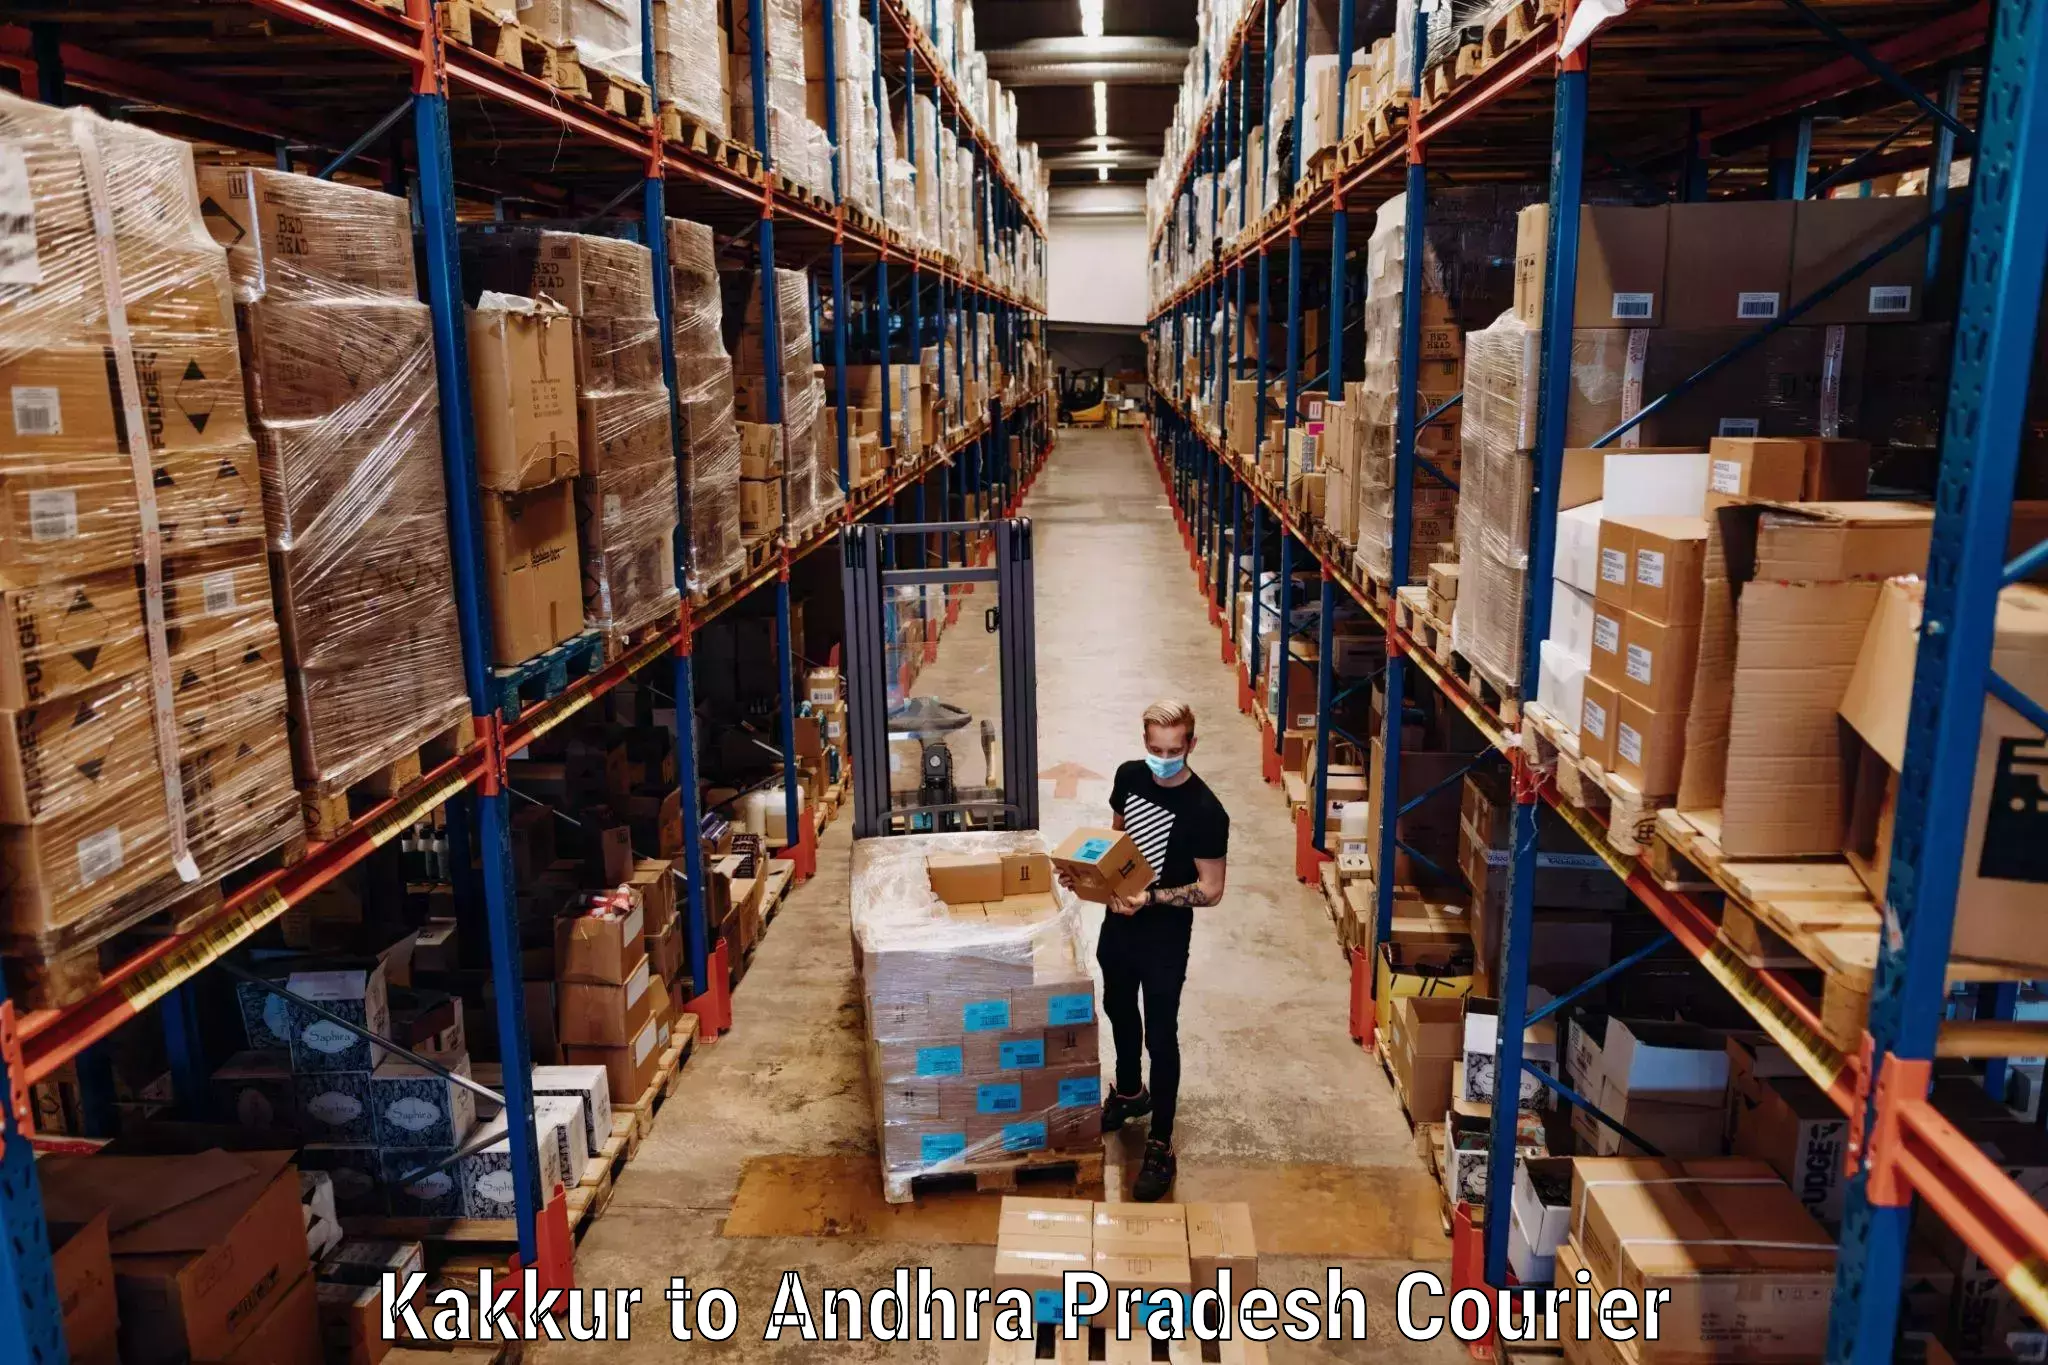 Luggage shipment specialists Kakkur to Visakhapatnam Port